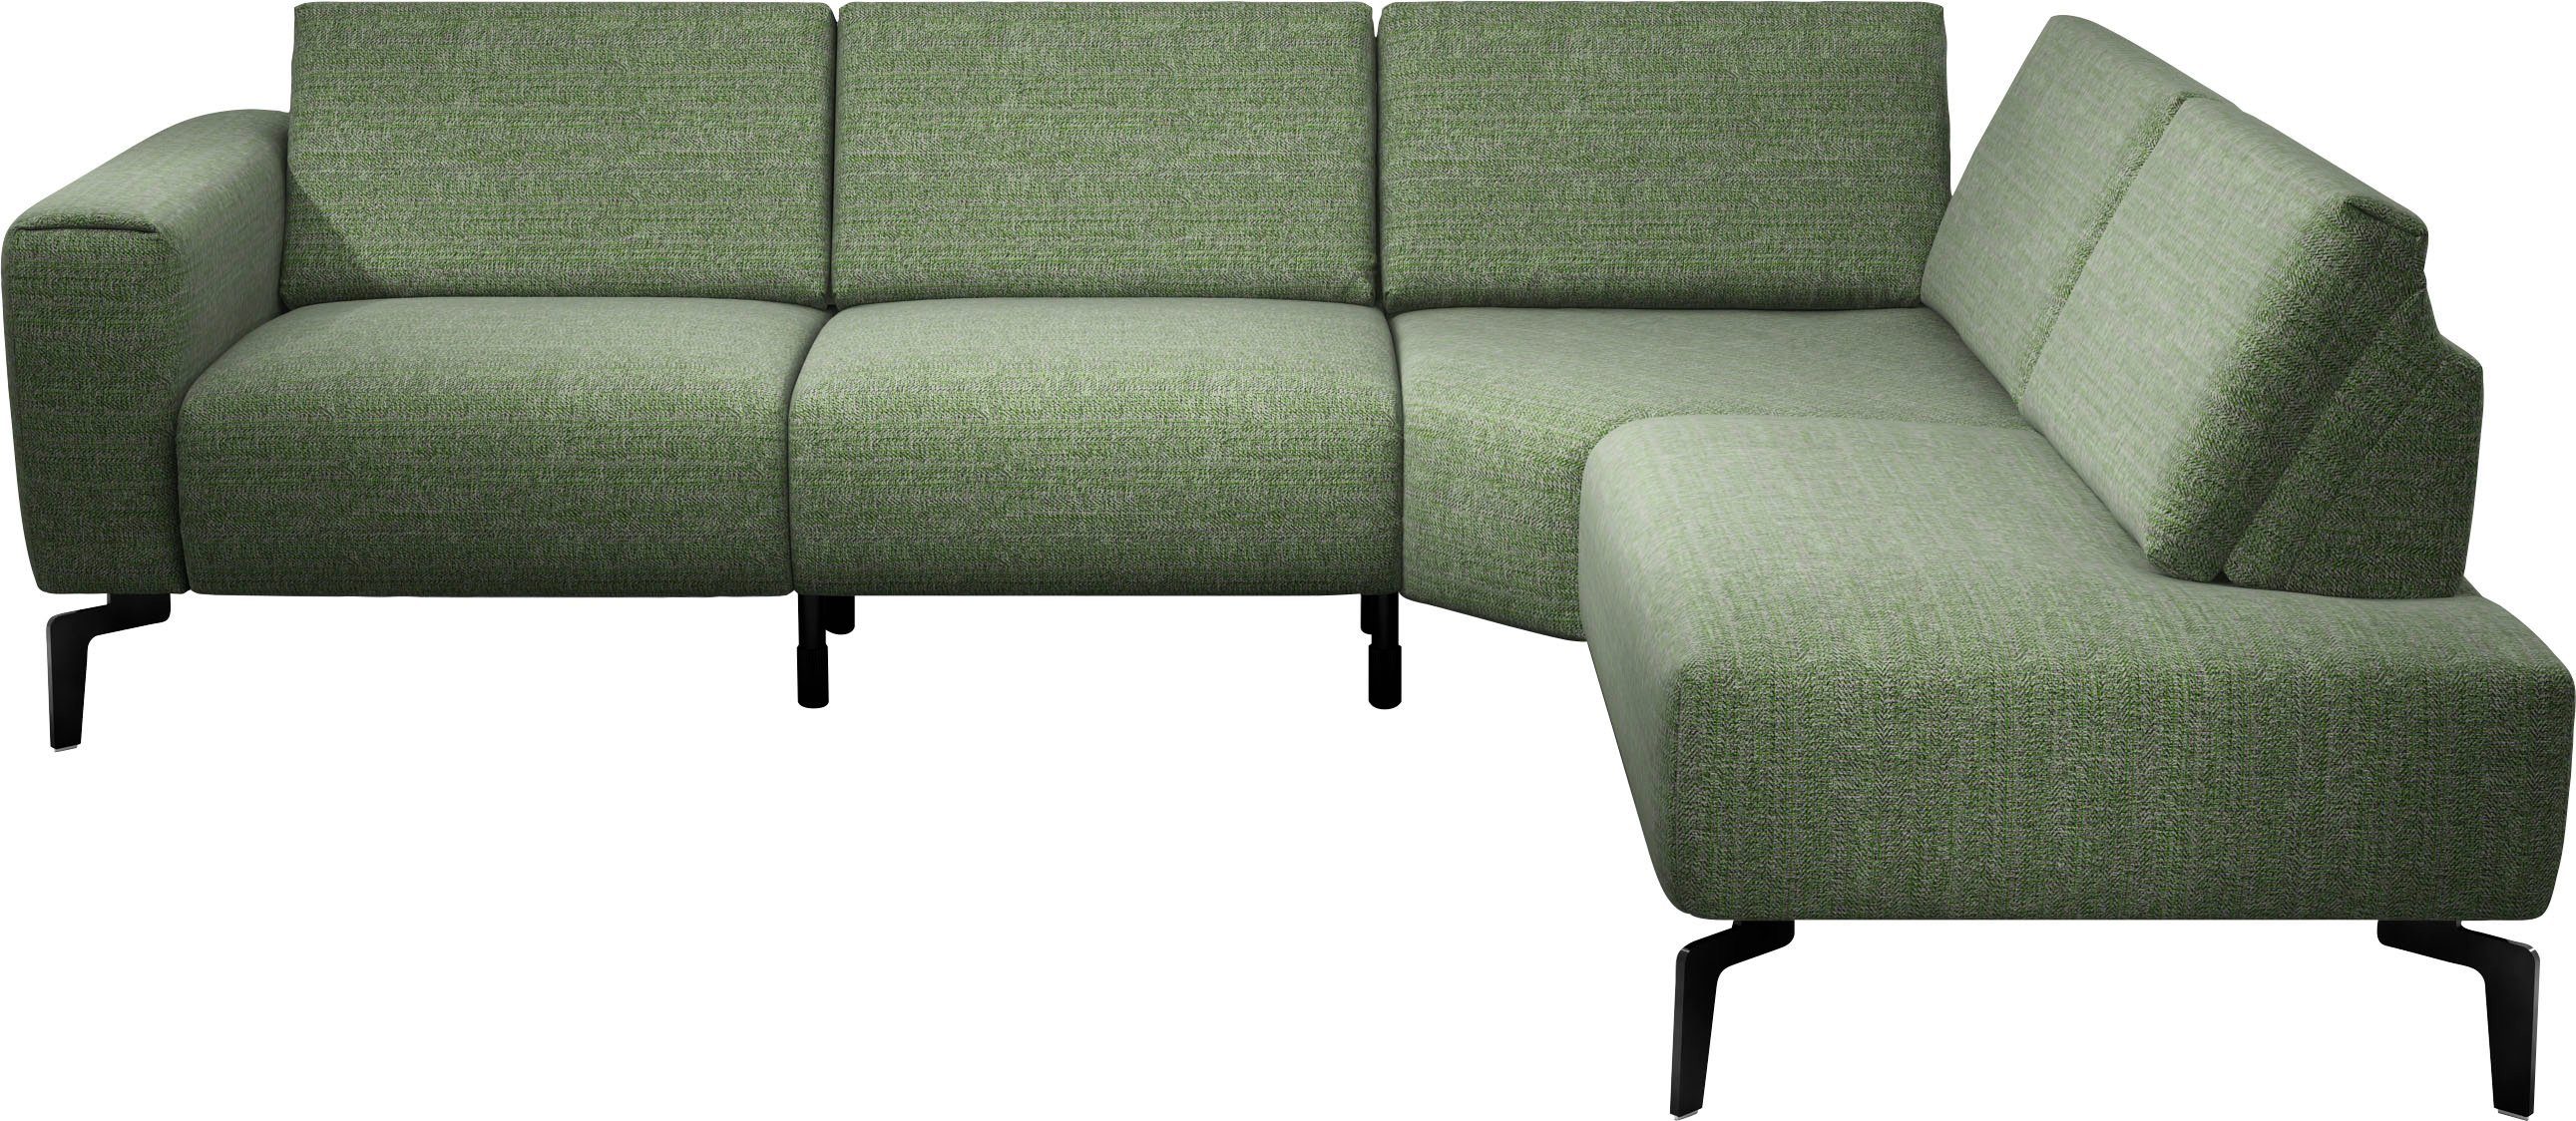 Sensoo Ecksofa Cosy1, 3 Komfortfunktionen (verstellbare Sitzhärte, Sitzposition, Sitzhöhe)